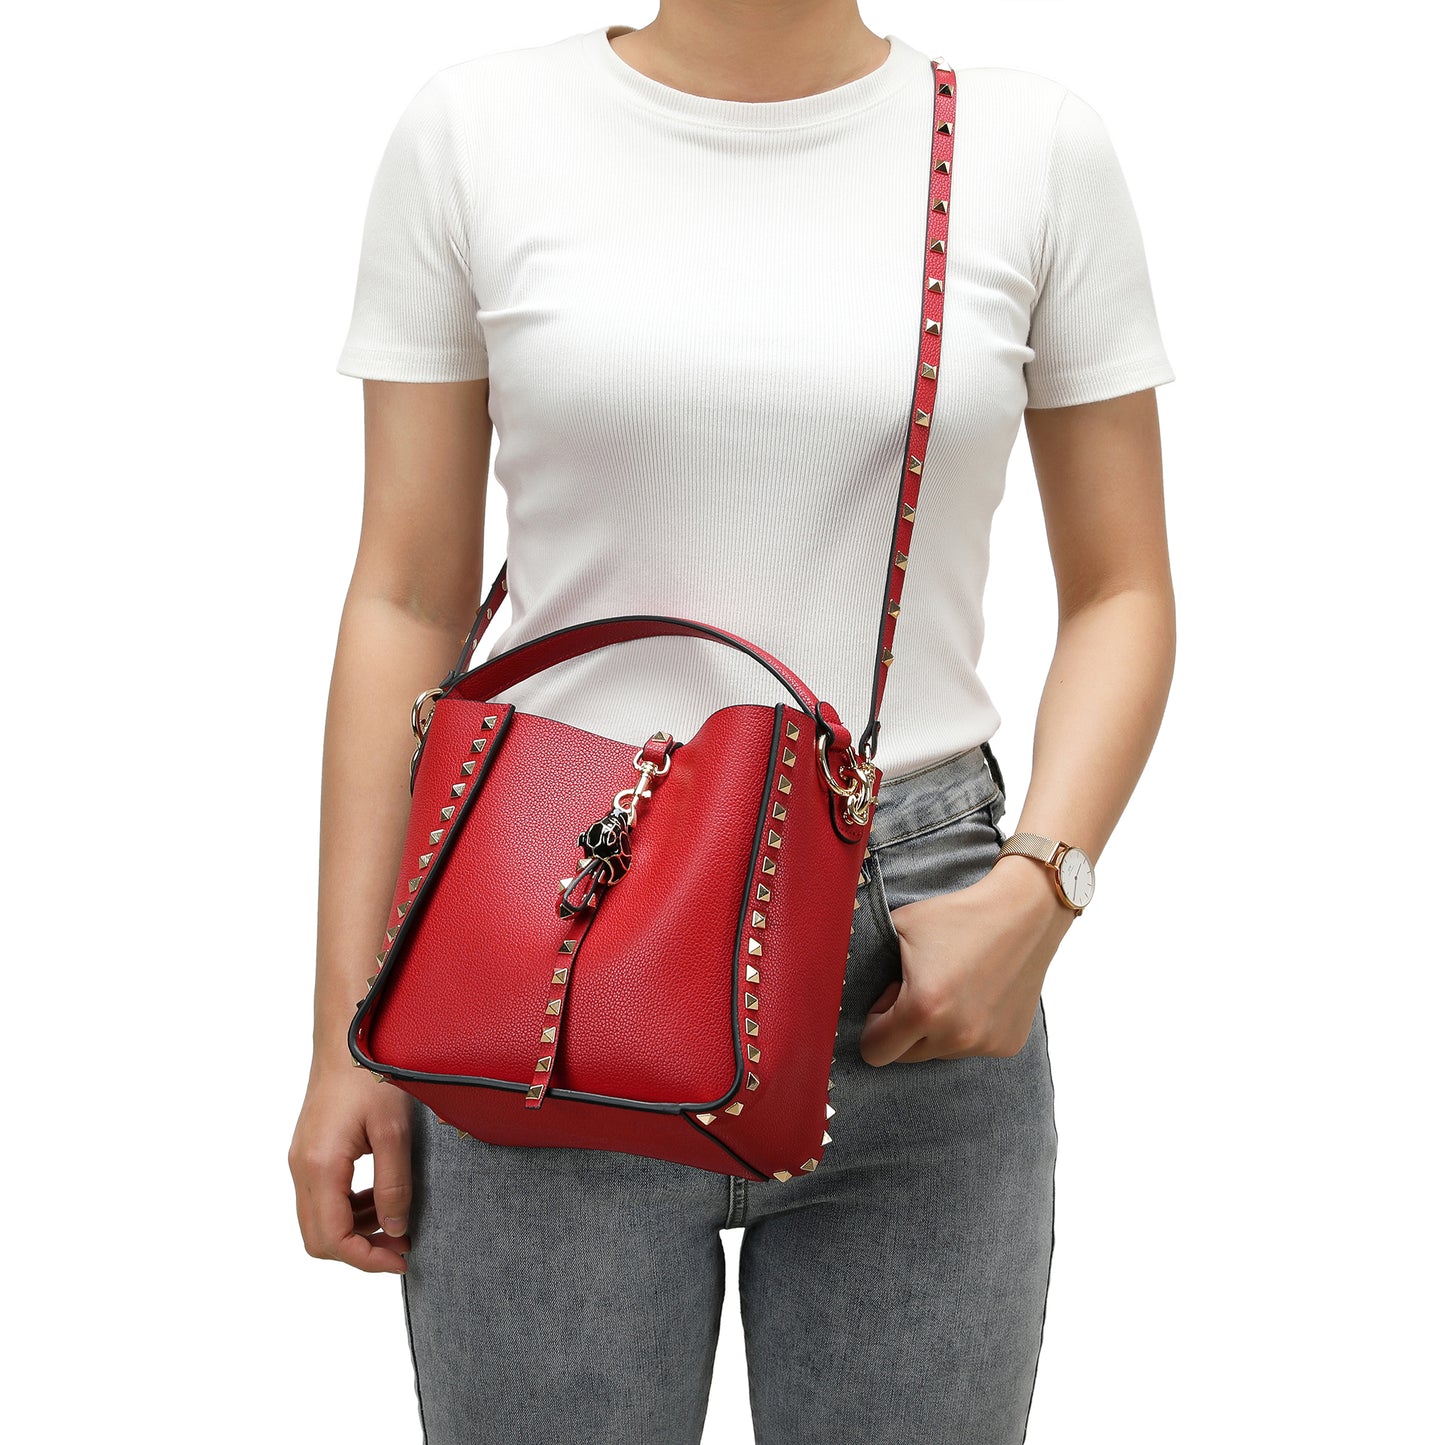 Full-Grain Leather Hobo/ Shoulder Bag